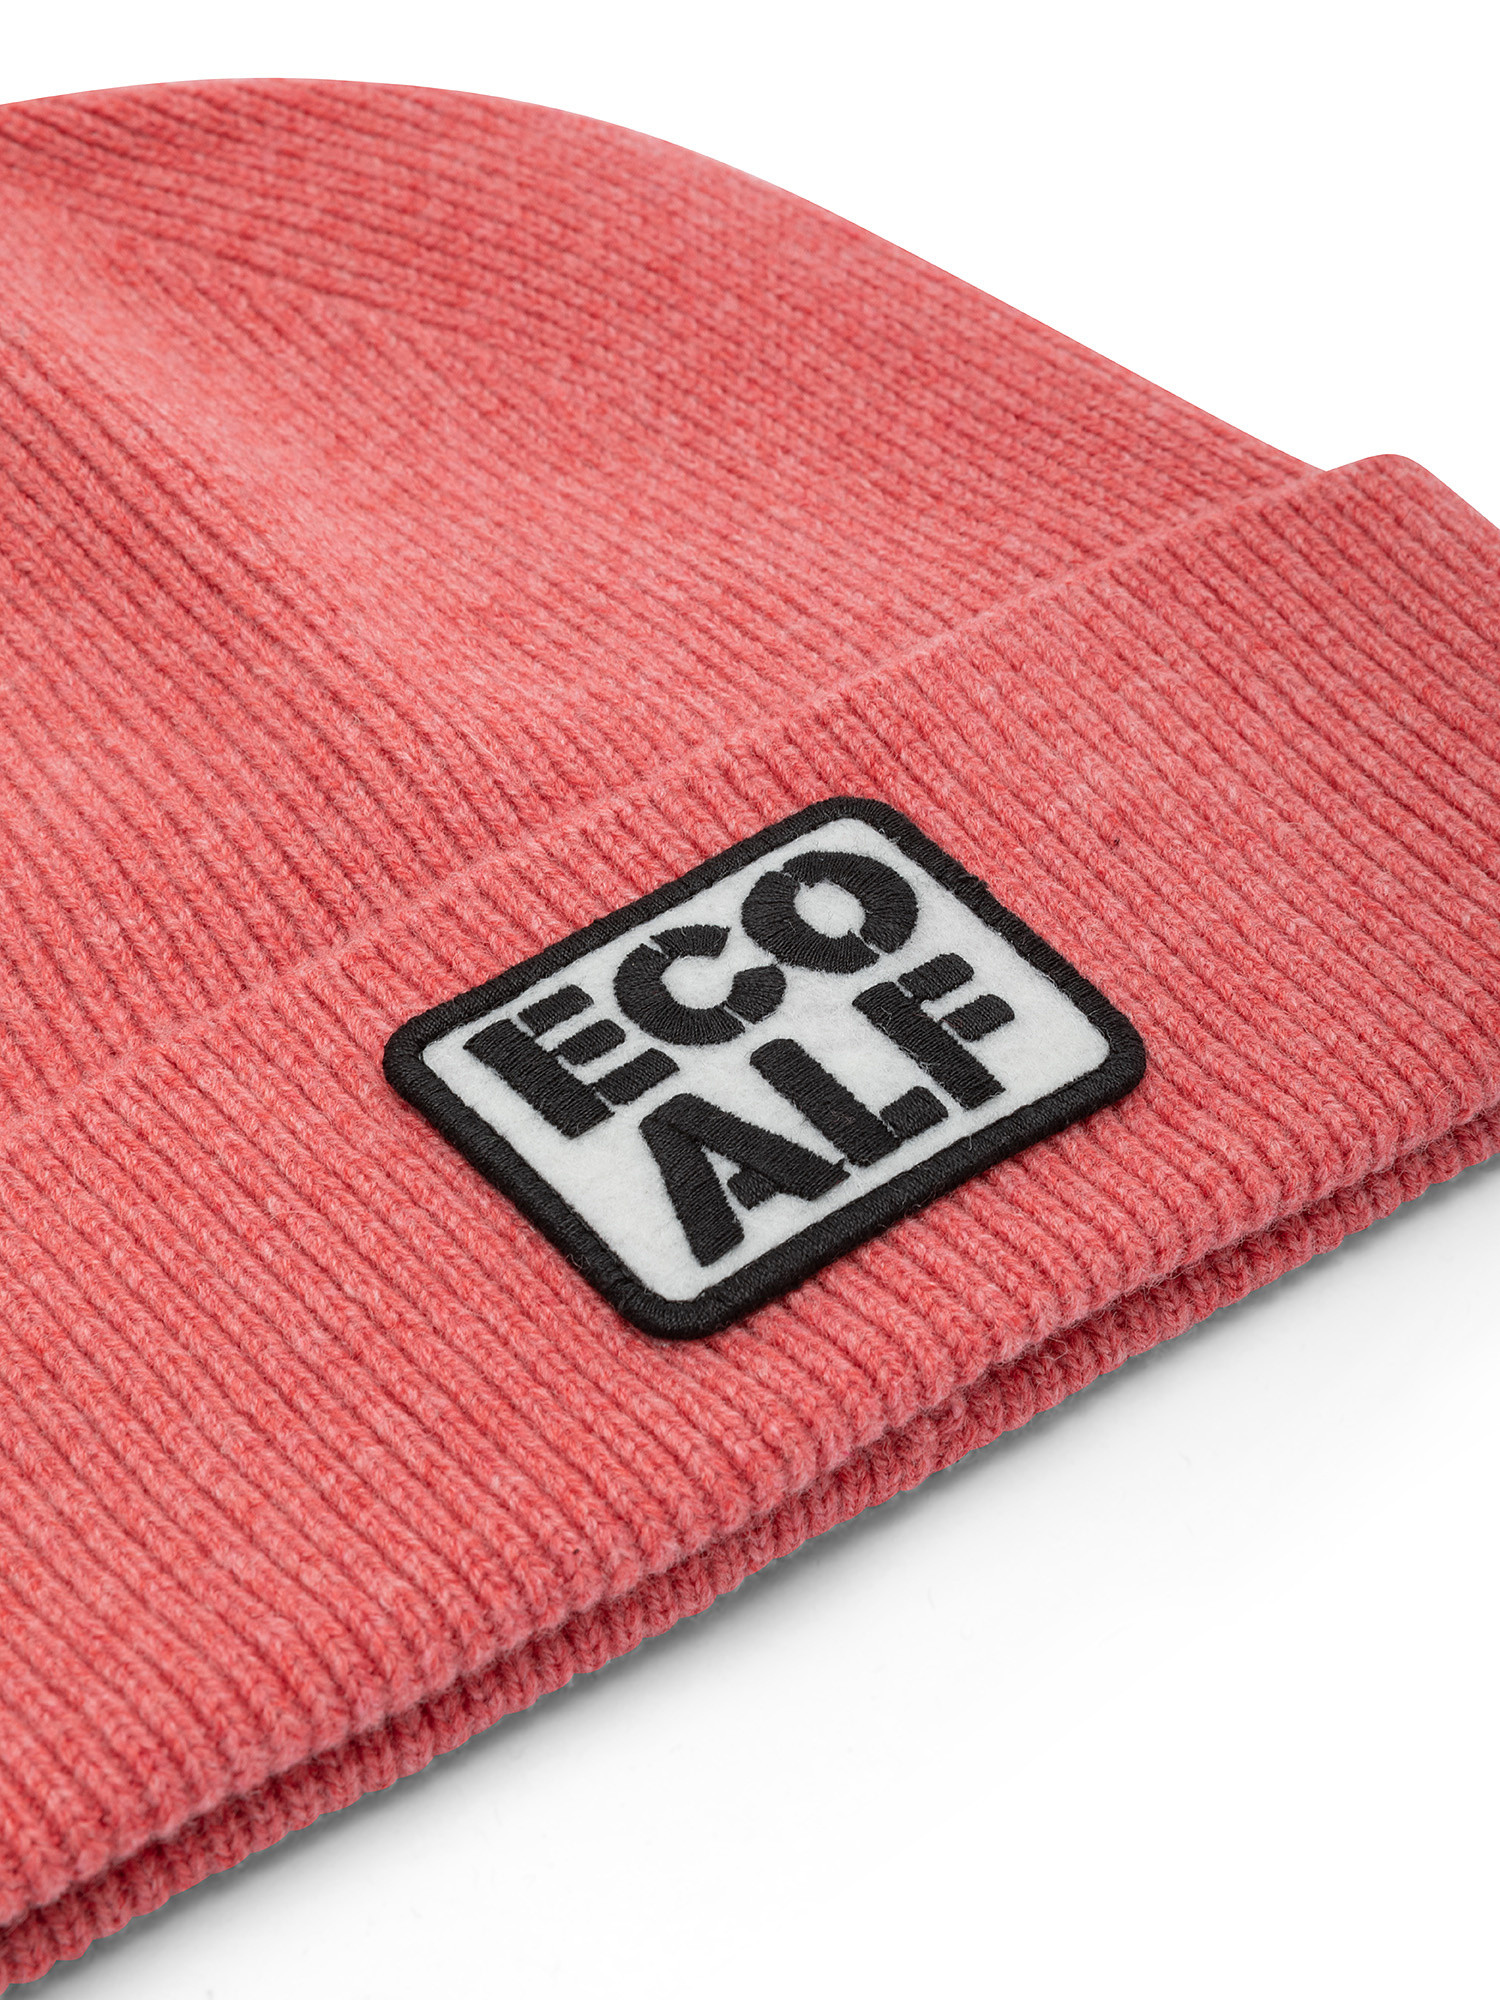 Ecoalf - Hat with logo, Dark Pink, large image number 1